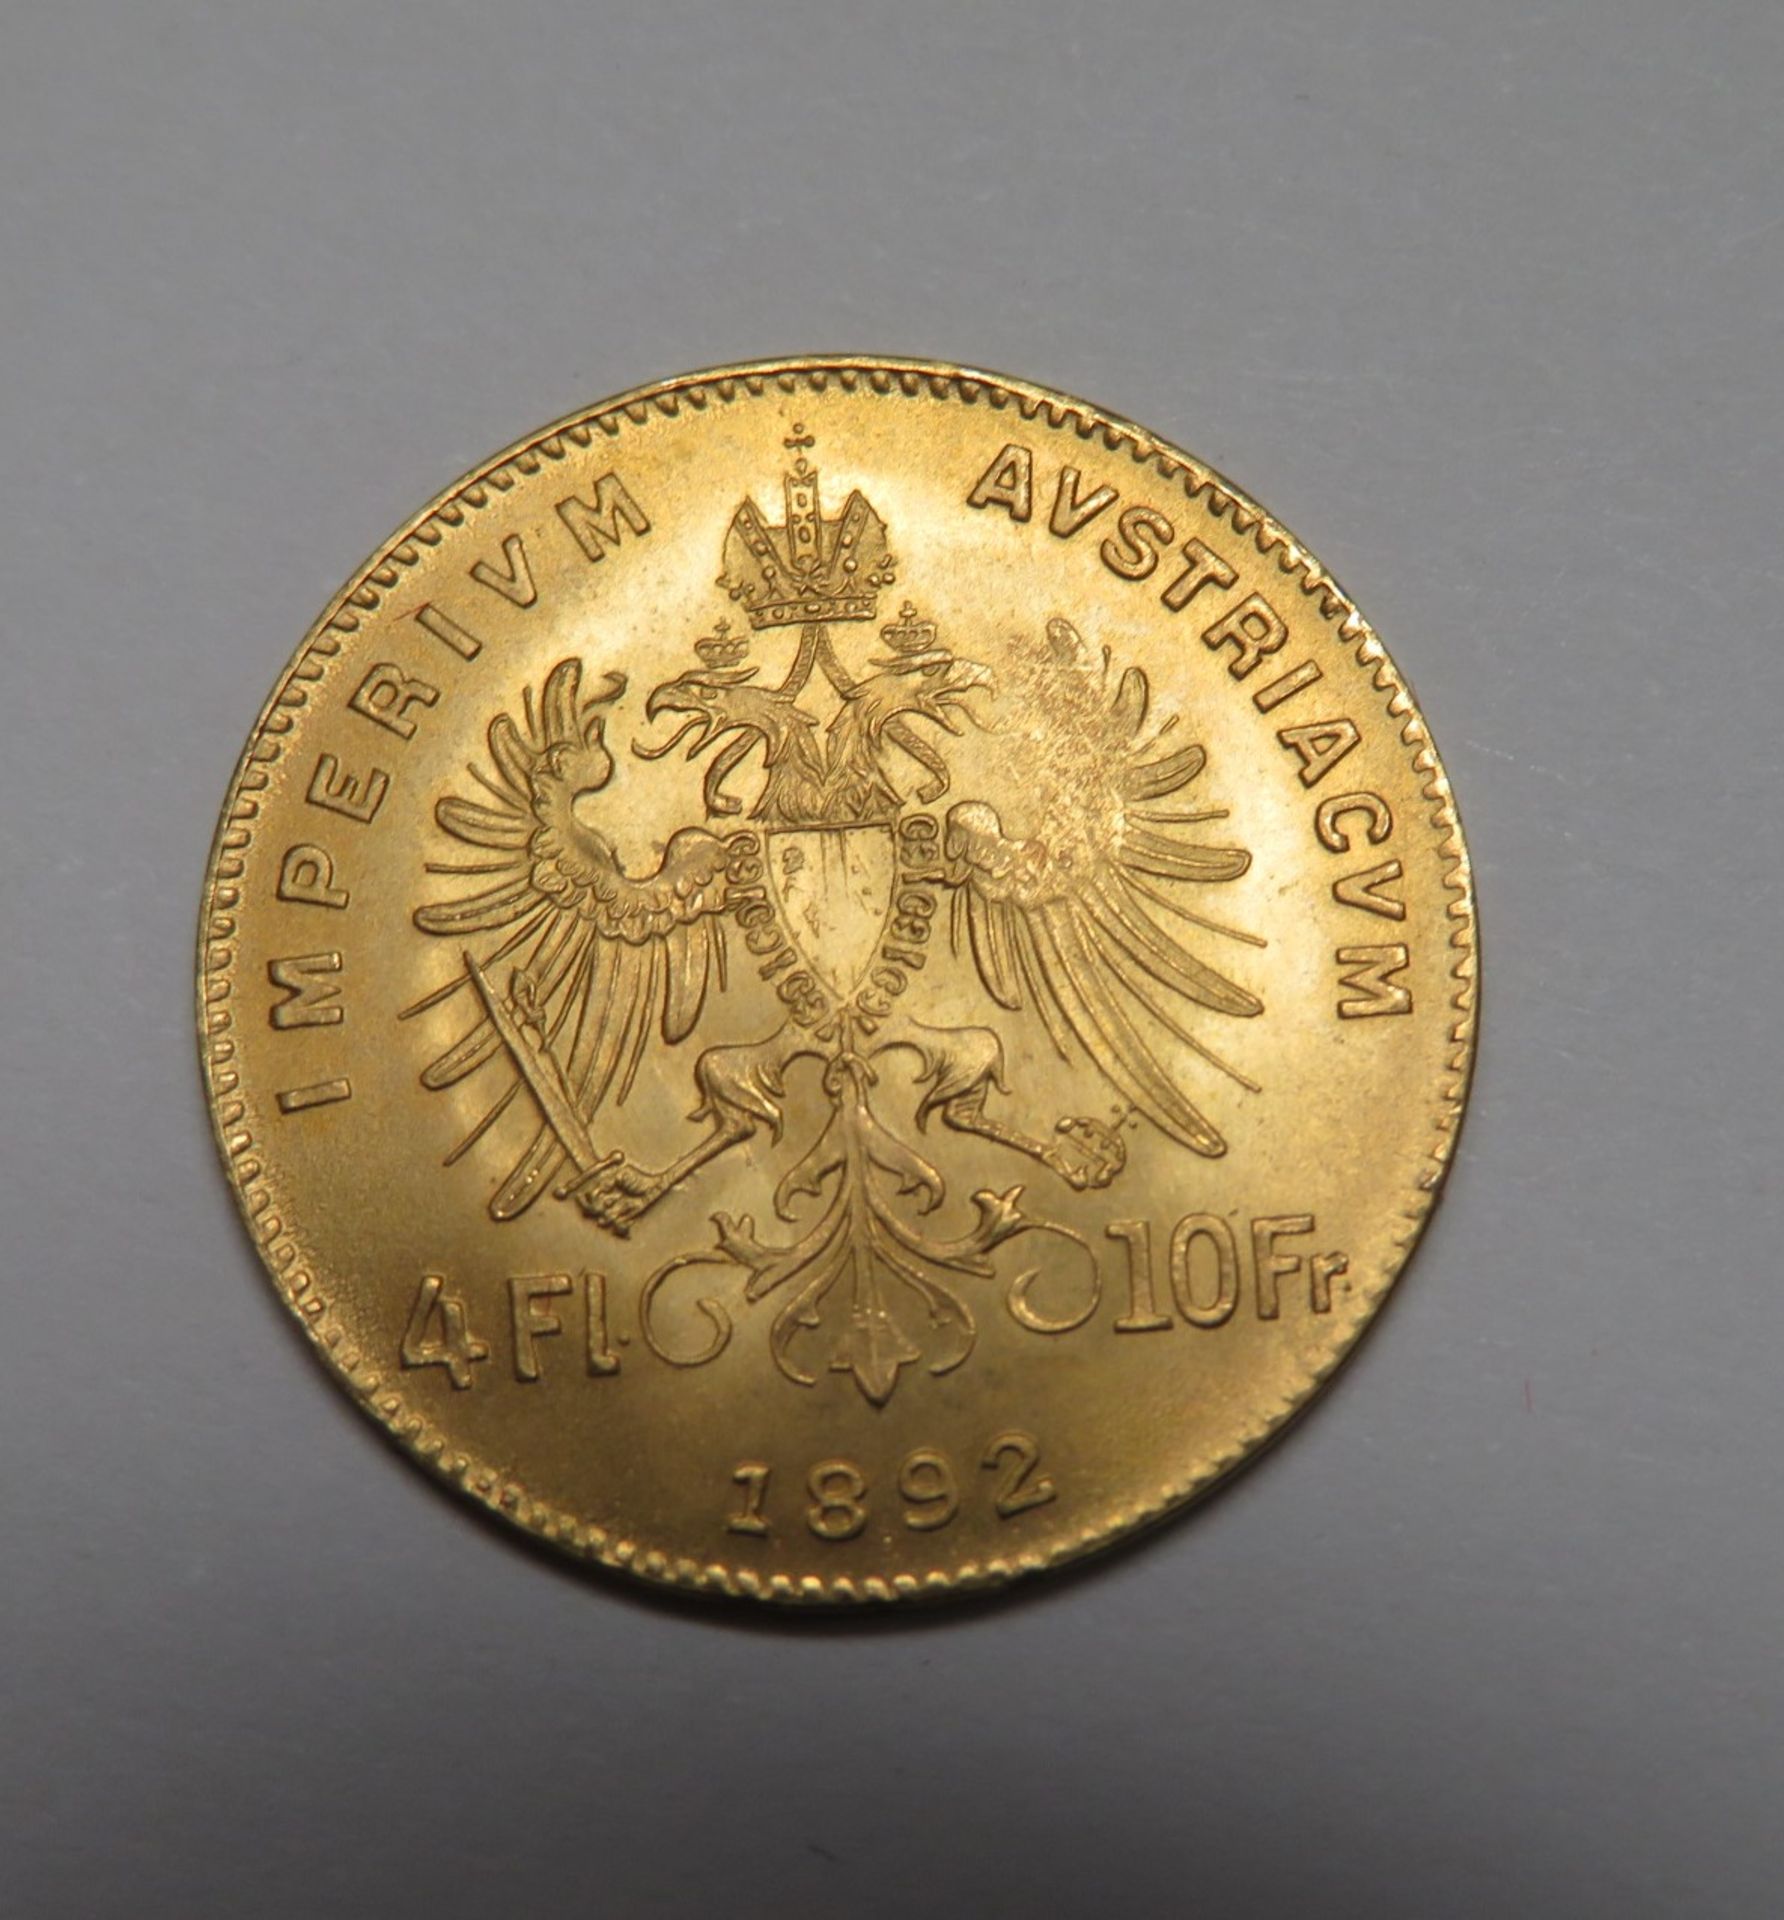 Goldmünze, Österreich, 4 Florin, 1892, Gold 986/000, 3,22 g, d 1,9 cm. - Image 2 of 2